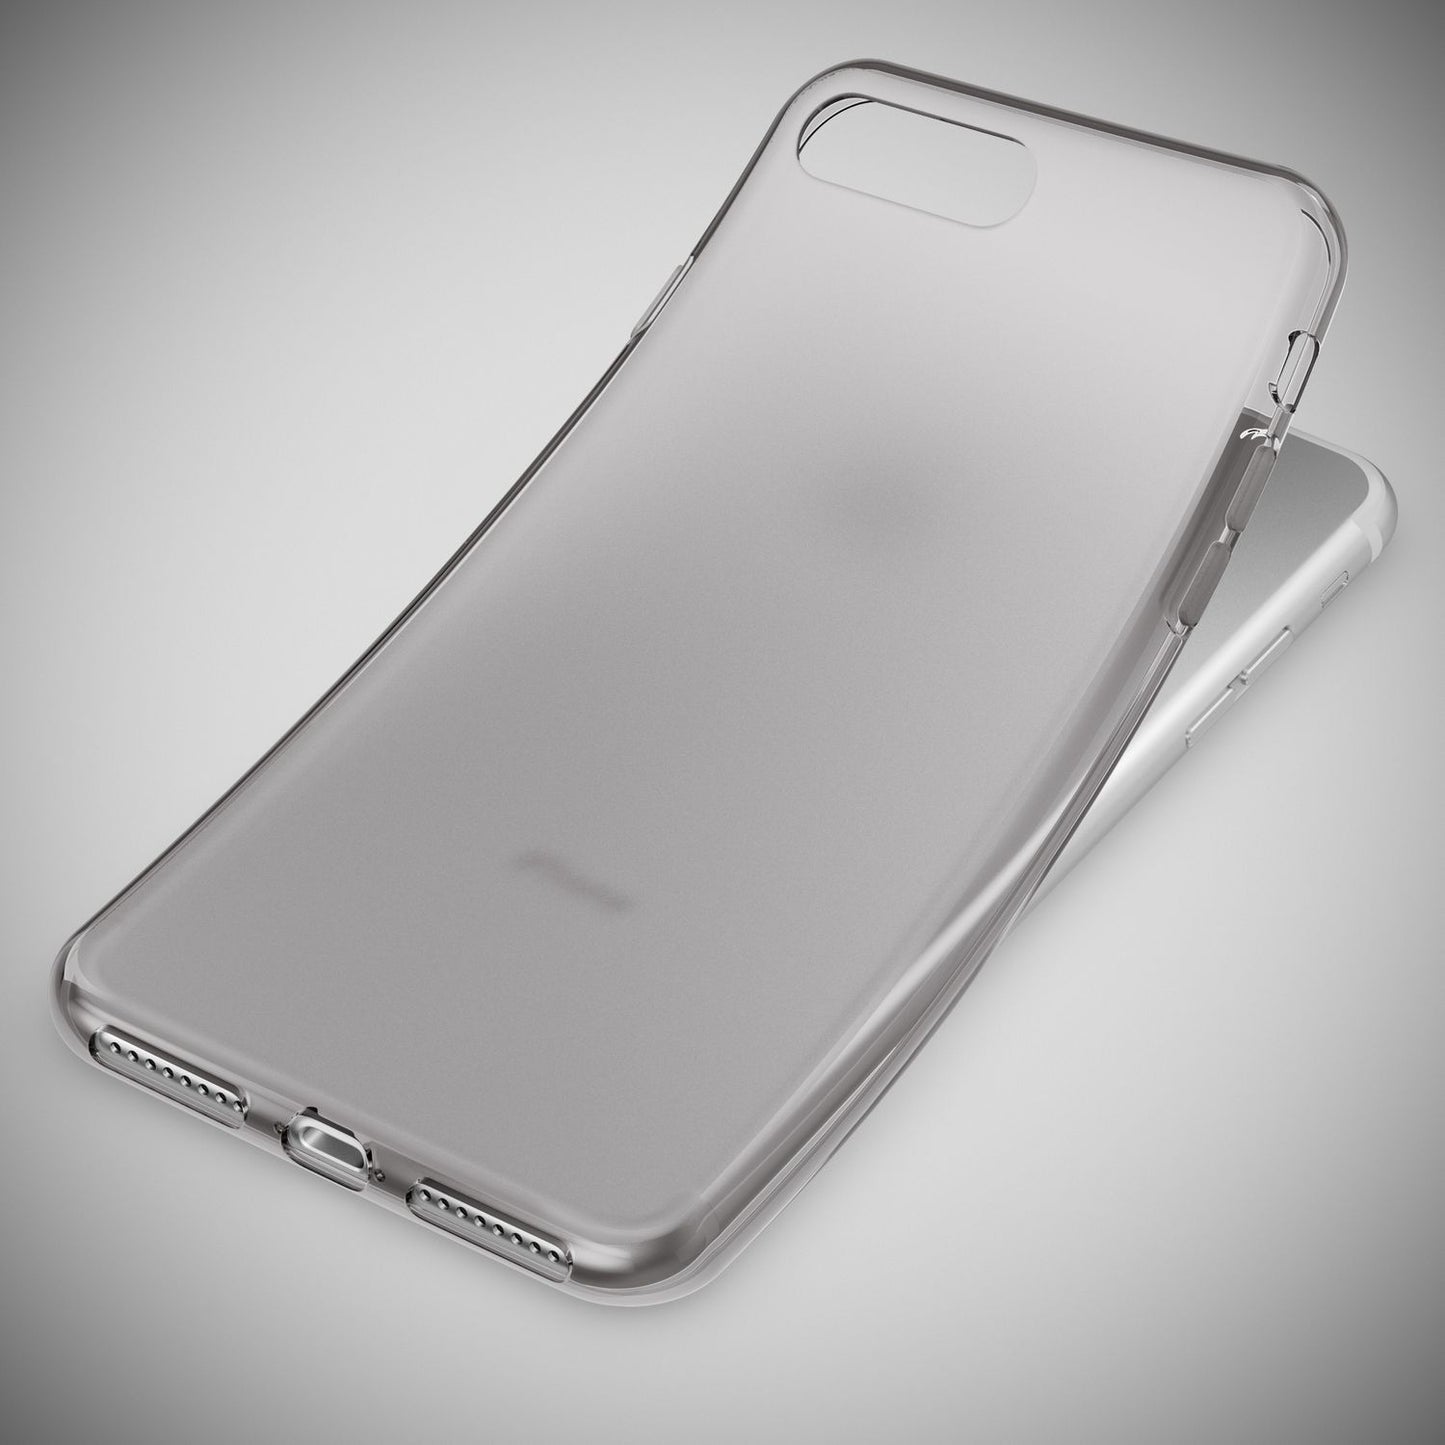 Apple iPhone 8 Plus / 7 Plus Handy Hülle von NALIA, Cover Case Silikon Bumper